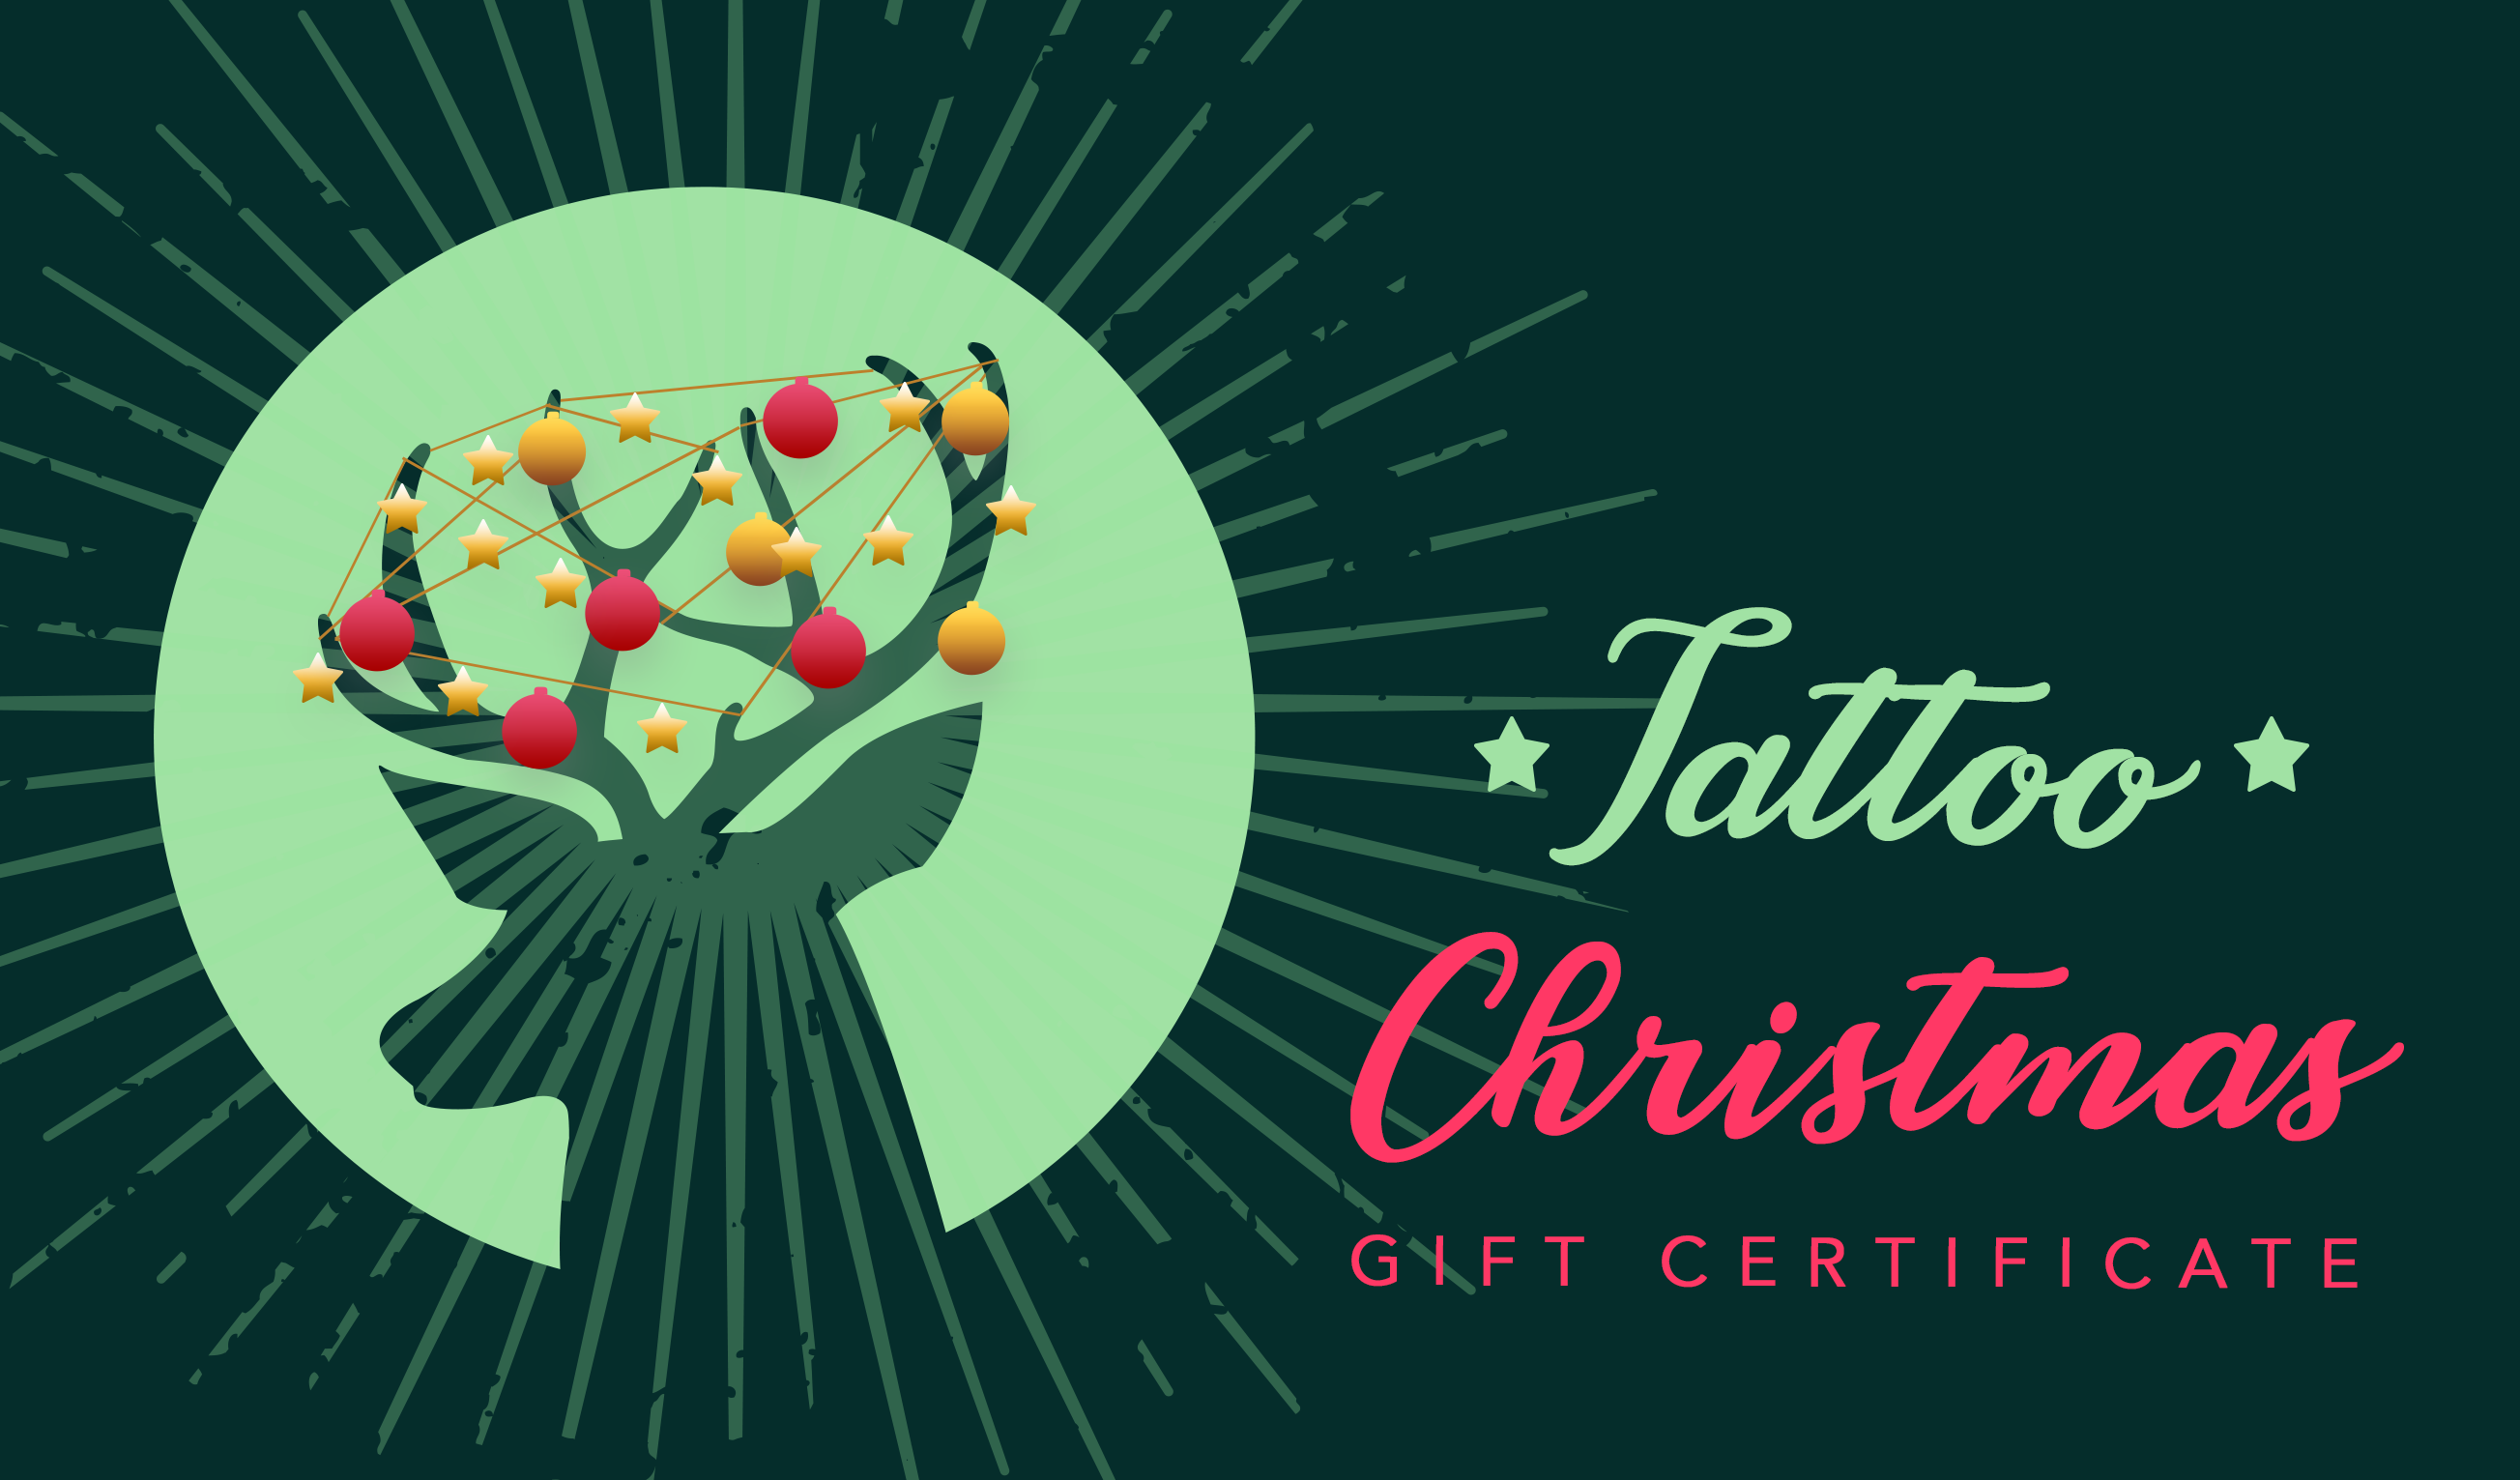 Free Printable Christmas Gift Certificate Templates - 22 With Tattoo Gift Certificate Template